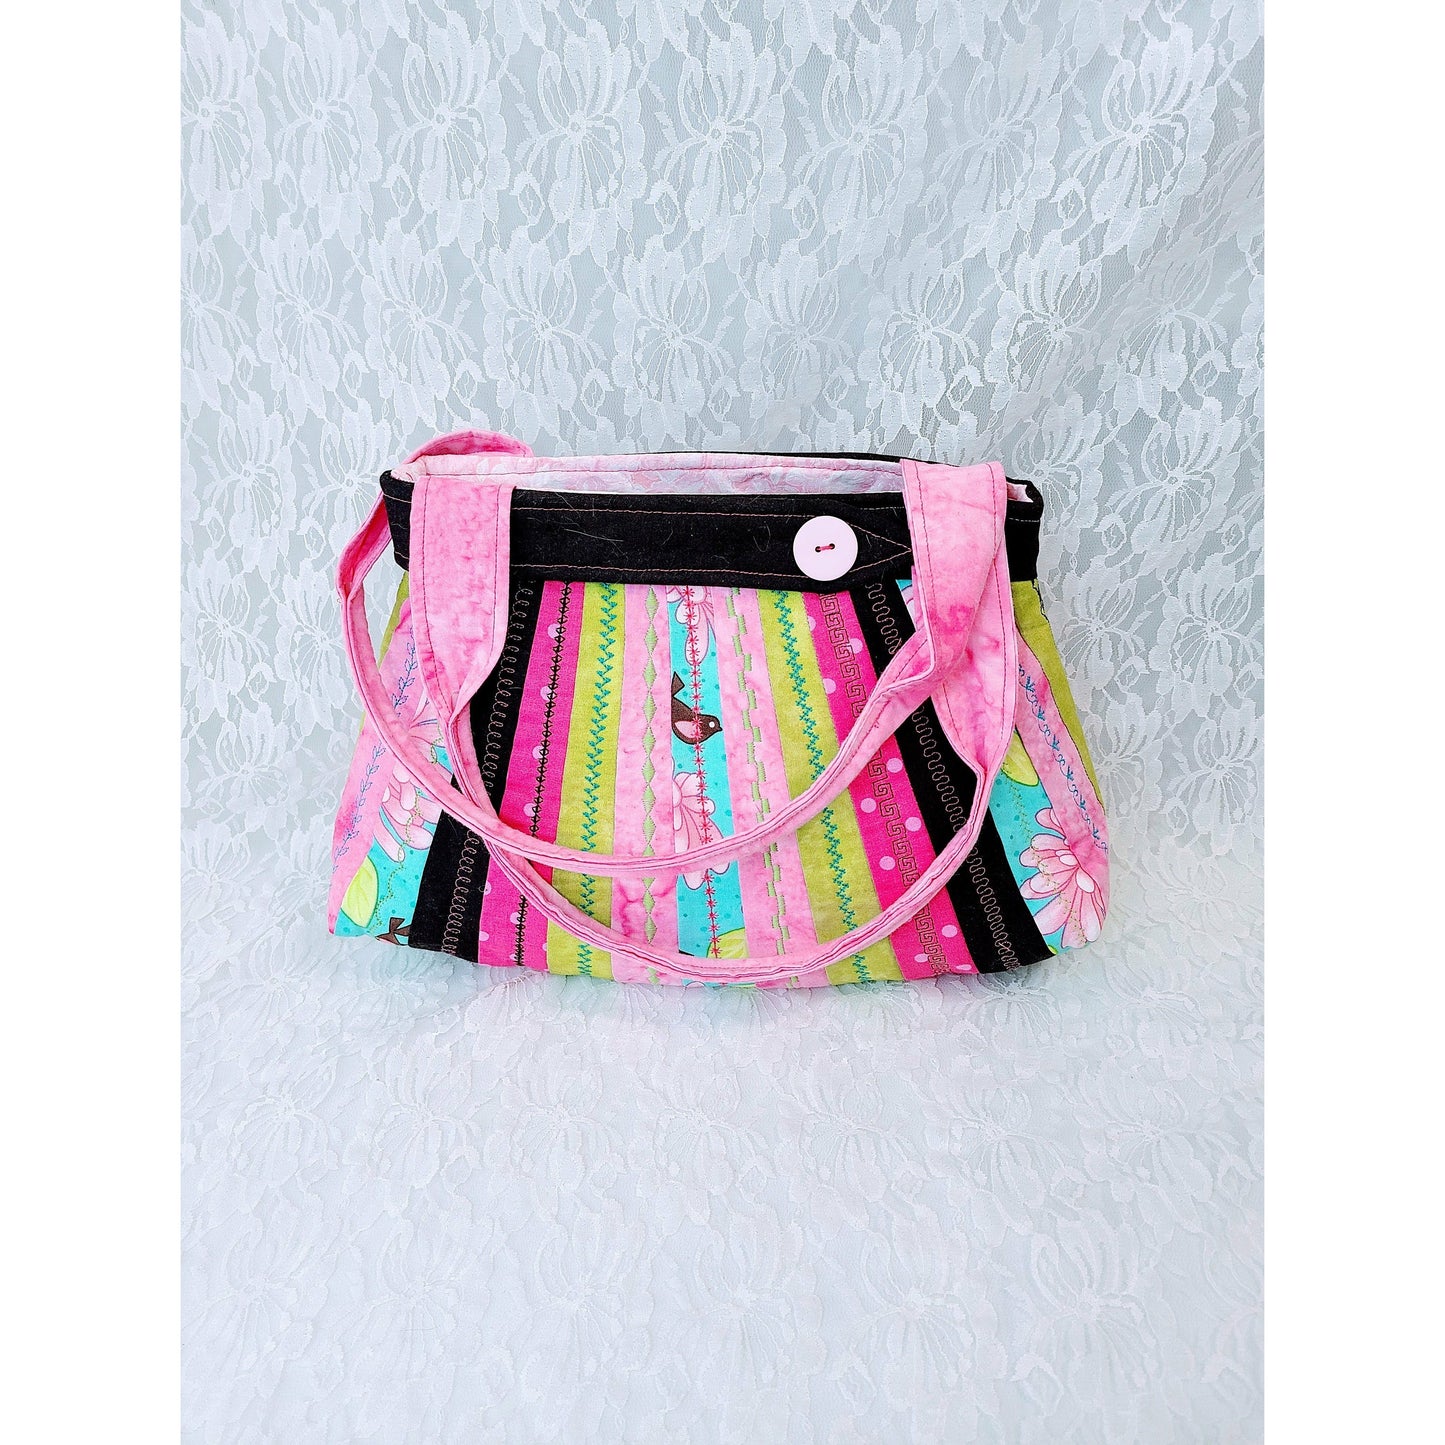 Handmade Purse ~ Vintage Style Handbag ~Floral w/ Bird Shoulder Bag ~ Perfect for Phone and Essentials ~ OOAK Satchel